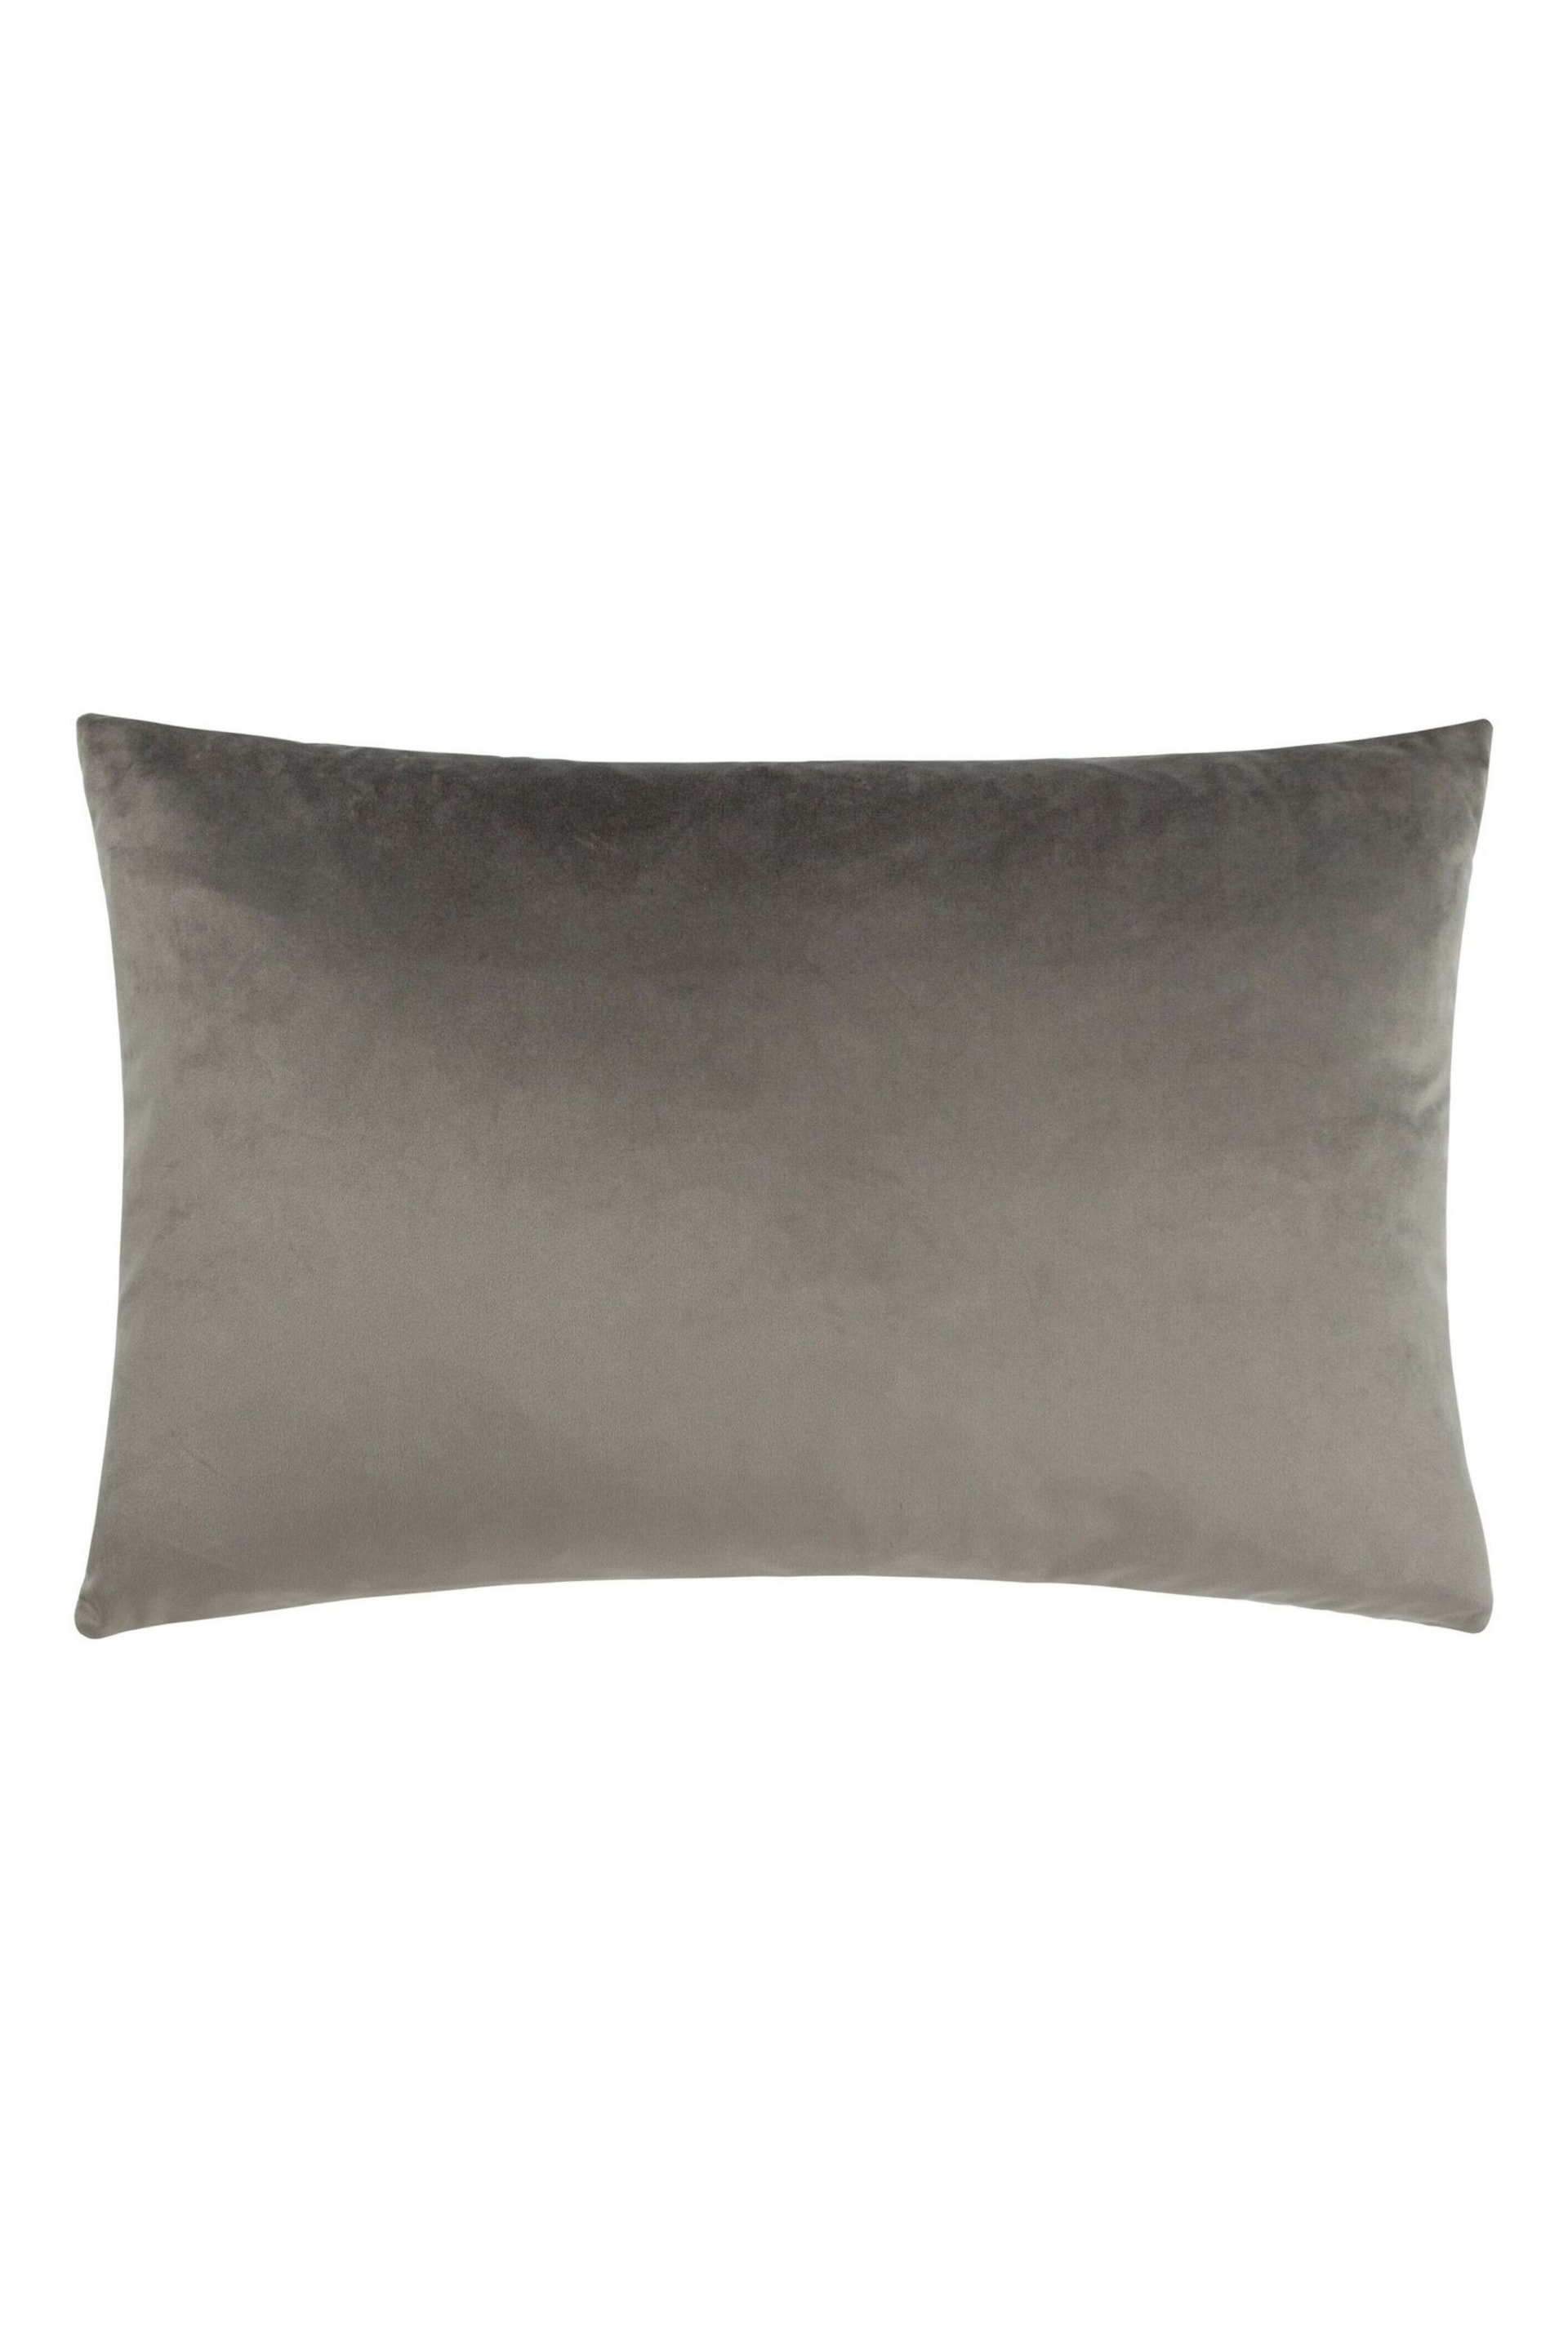 Paoletti Grey Lexington Velvet Jacquard Feather Filled Cushion - Image 2 of 5